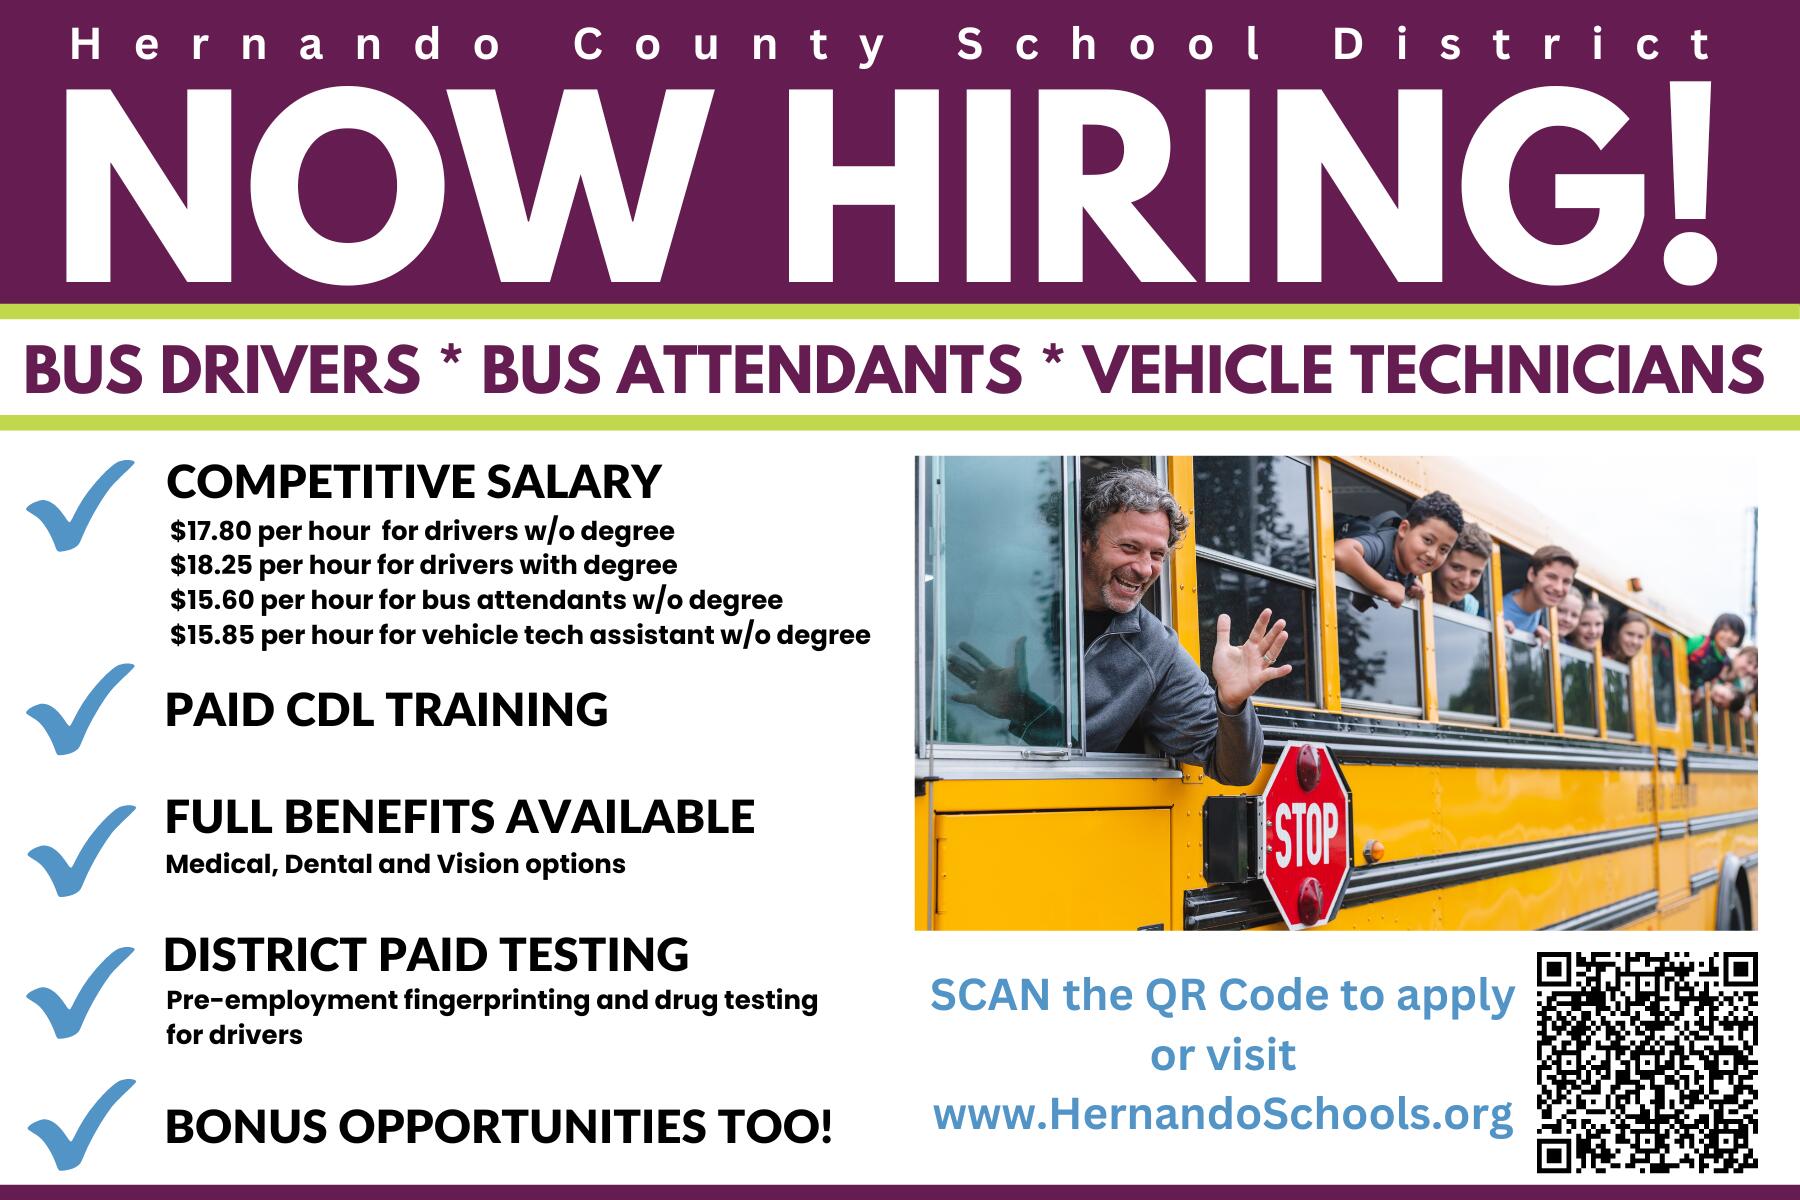 Bus Driver Recruitment flyer